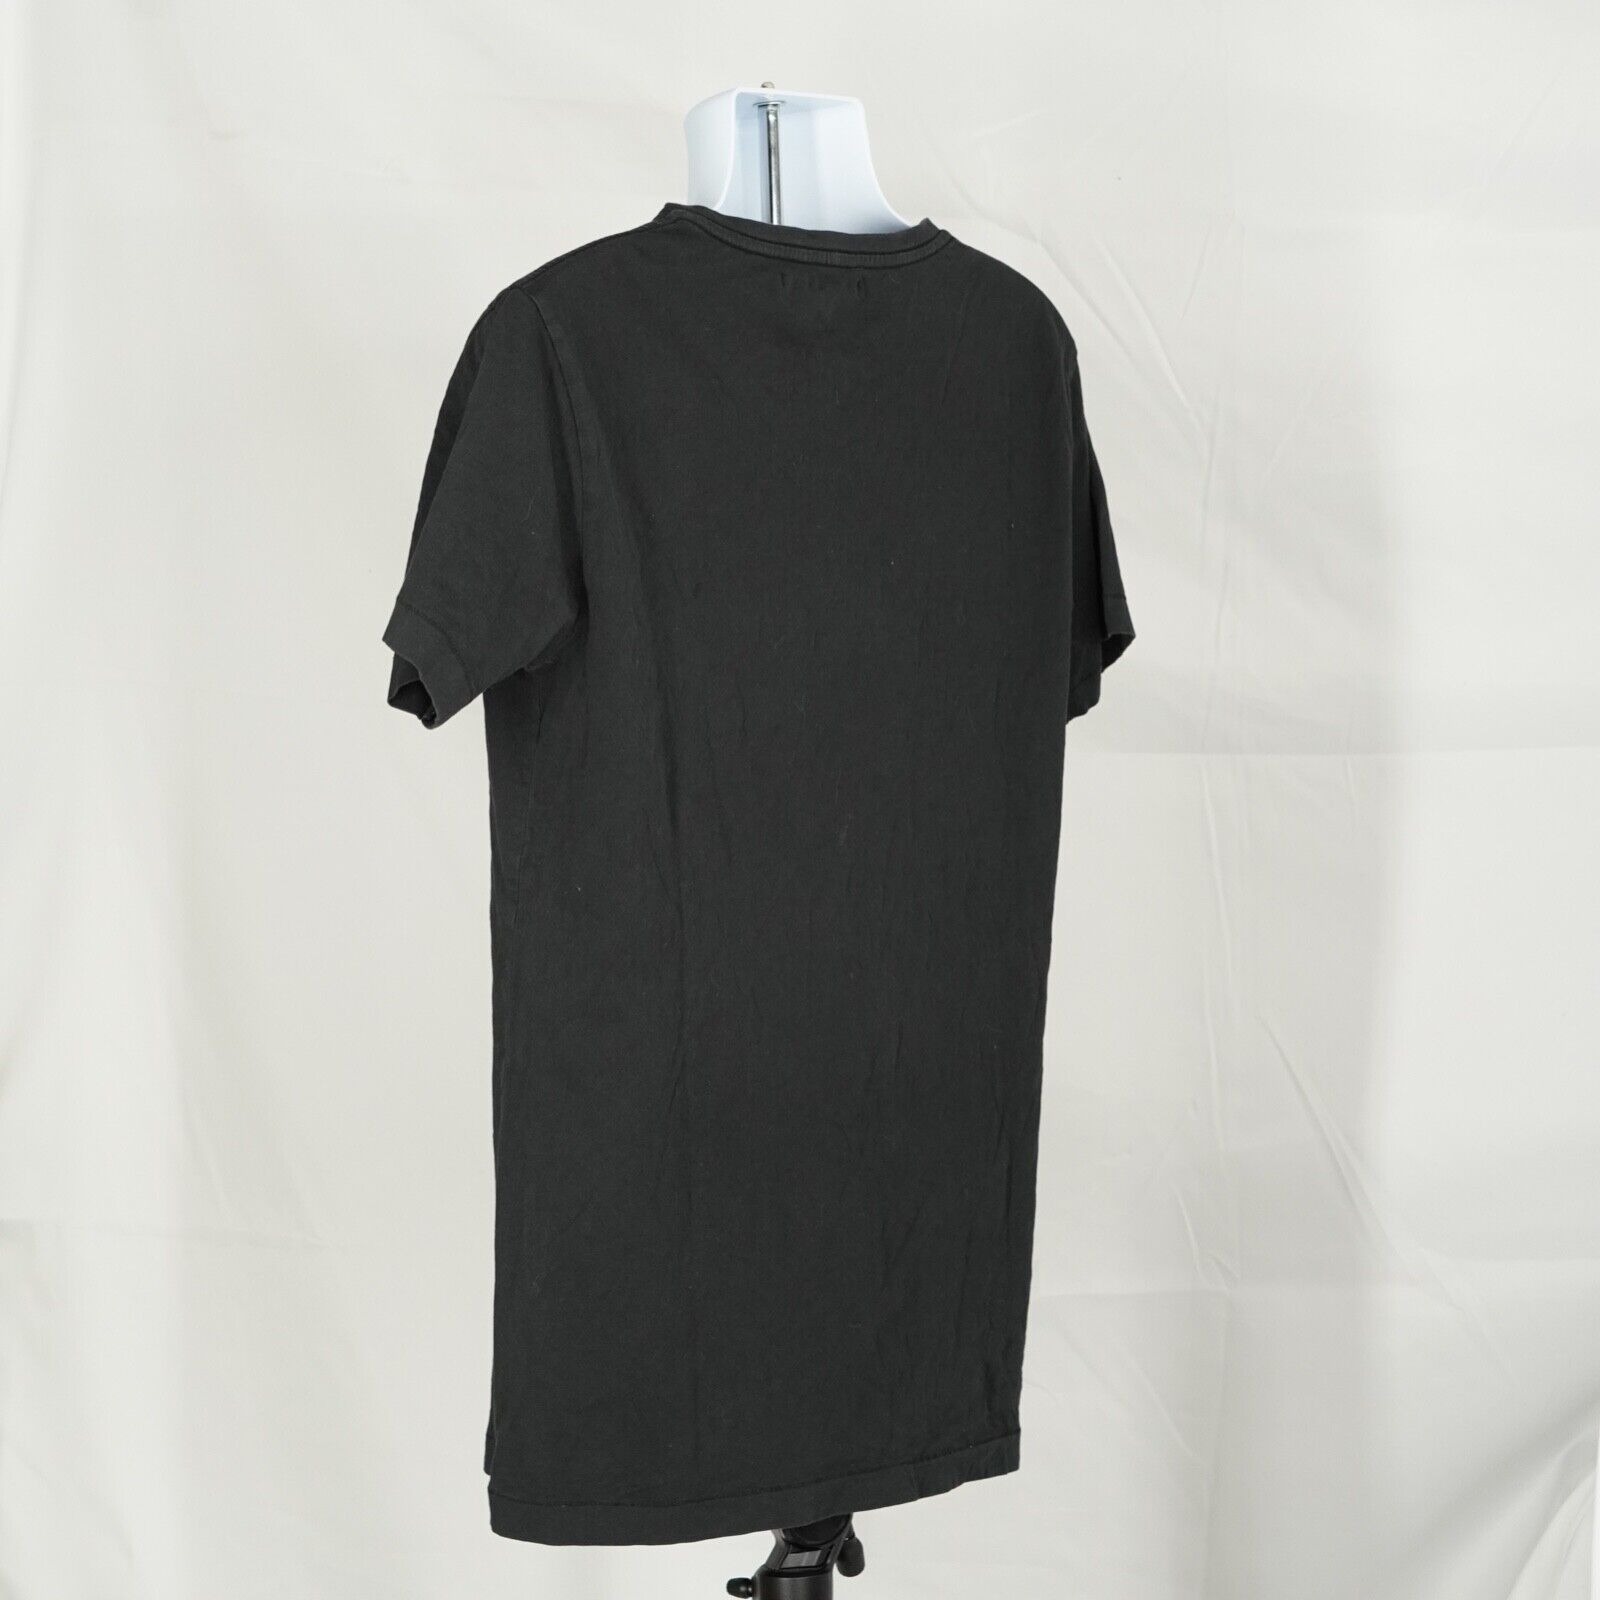 Tsubi Black Cross Graphic T Shirt - 5